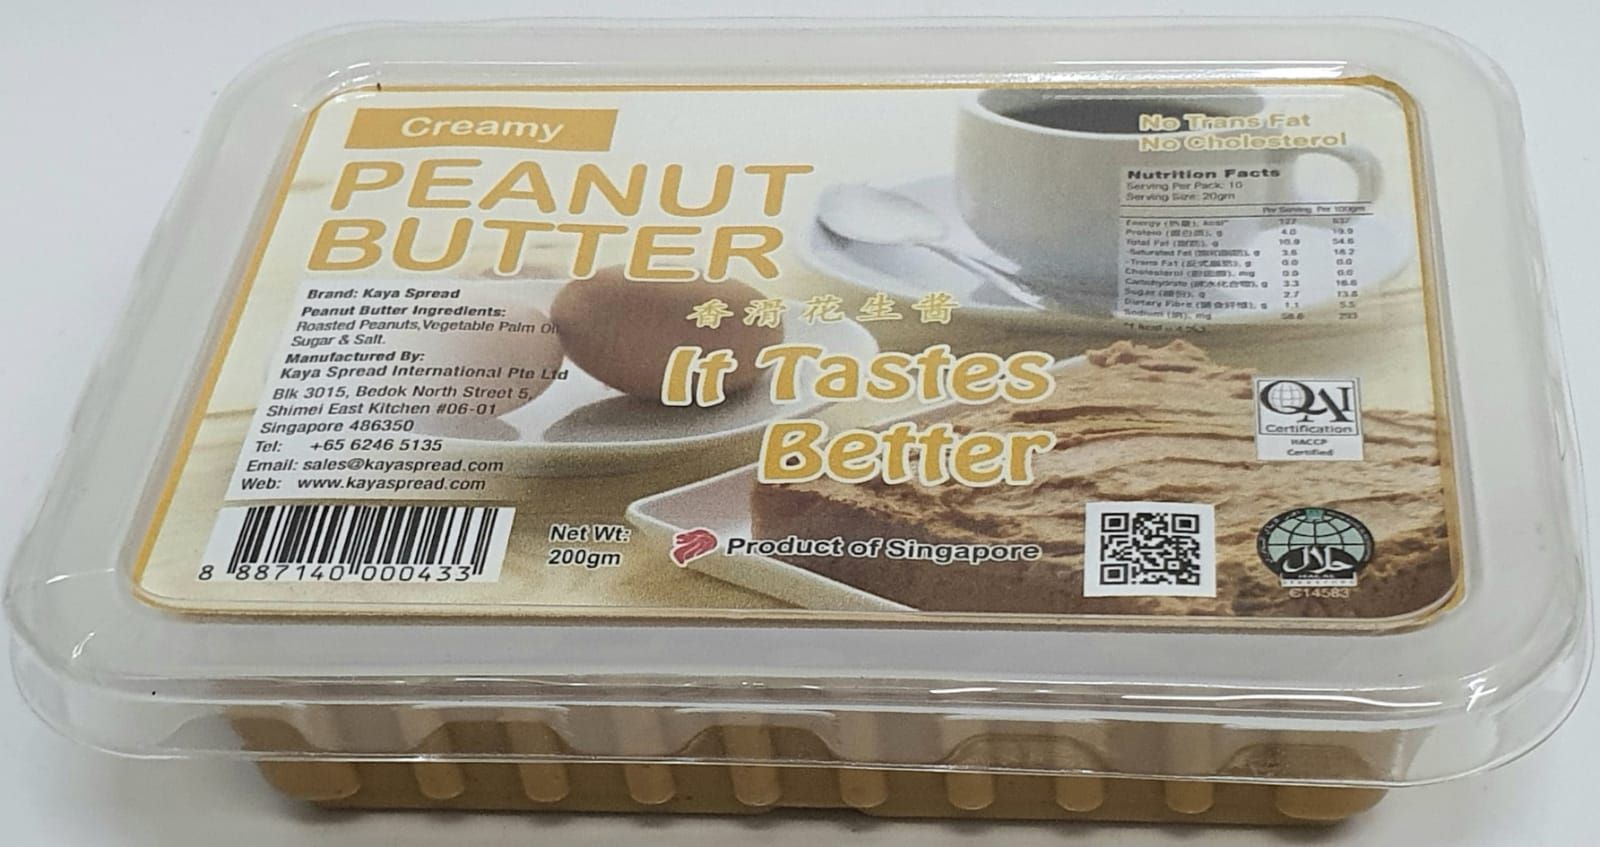  Creamy Peanut Butter 200gm/ Box 